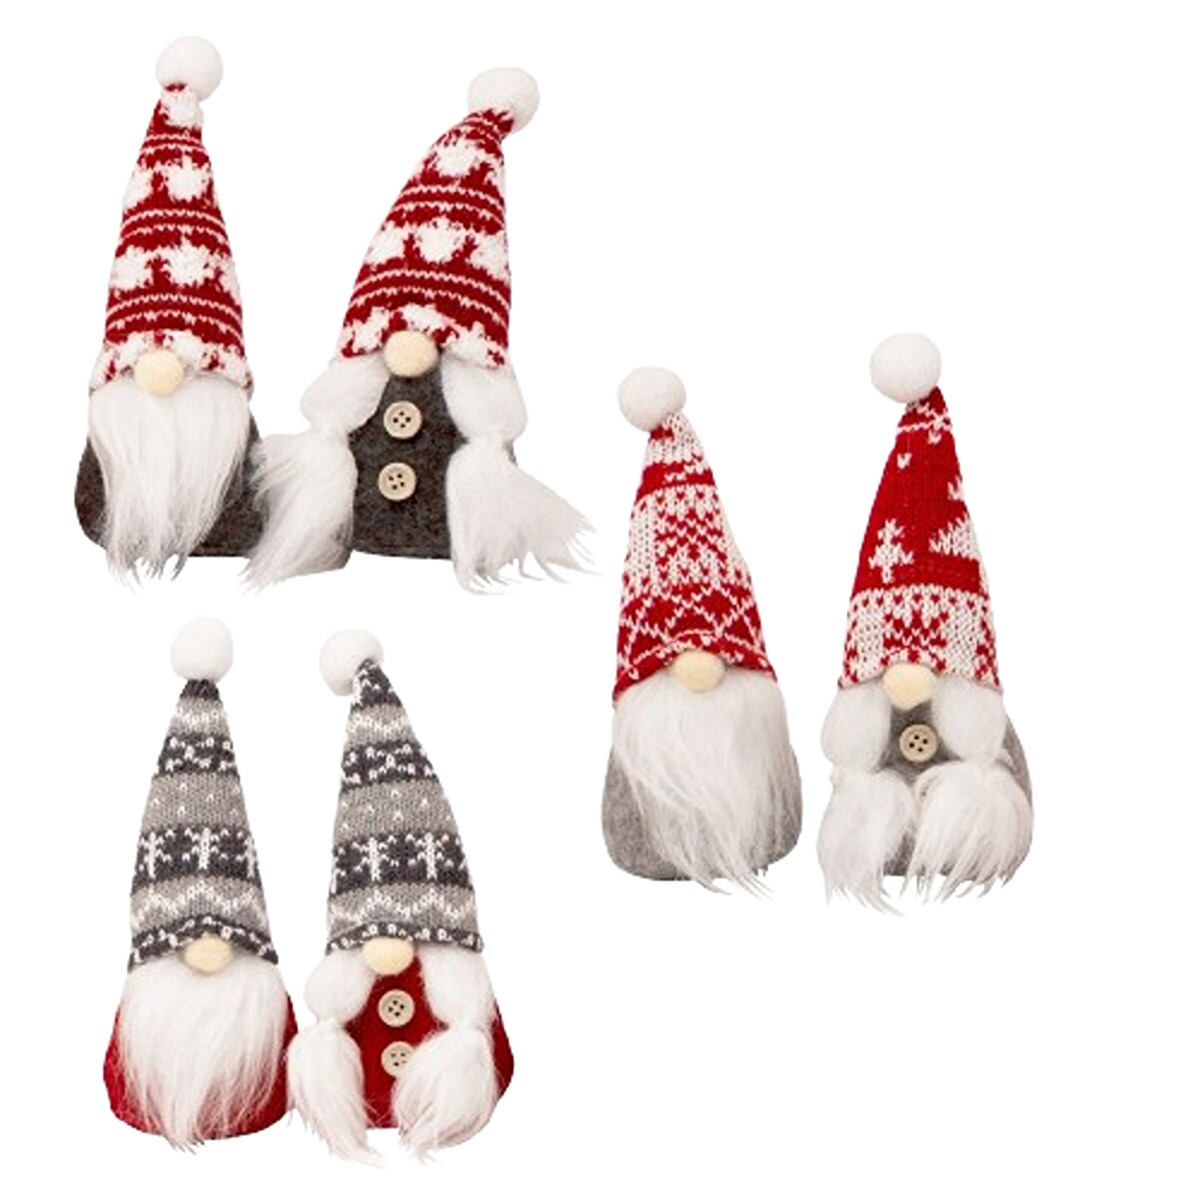 Charming Christmas Gnome Ornament Set of 6